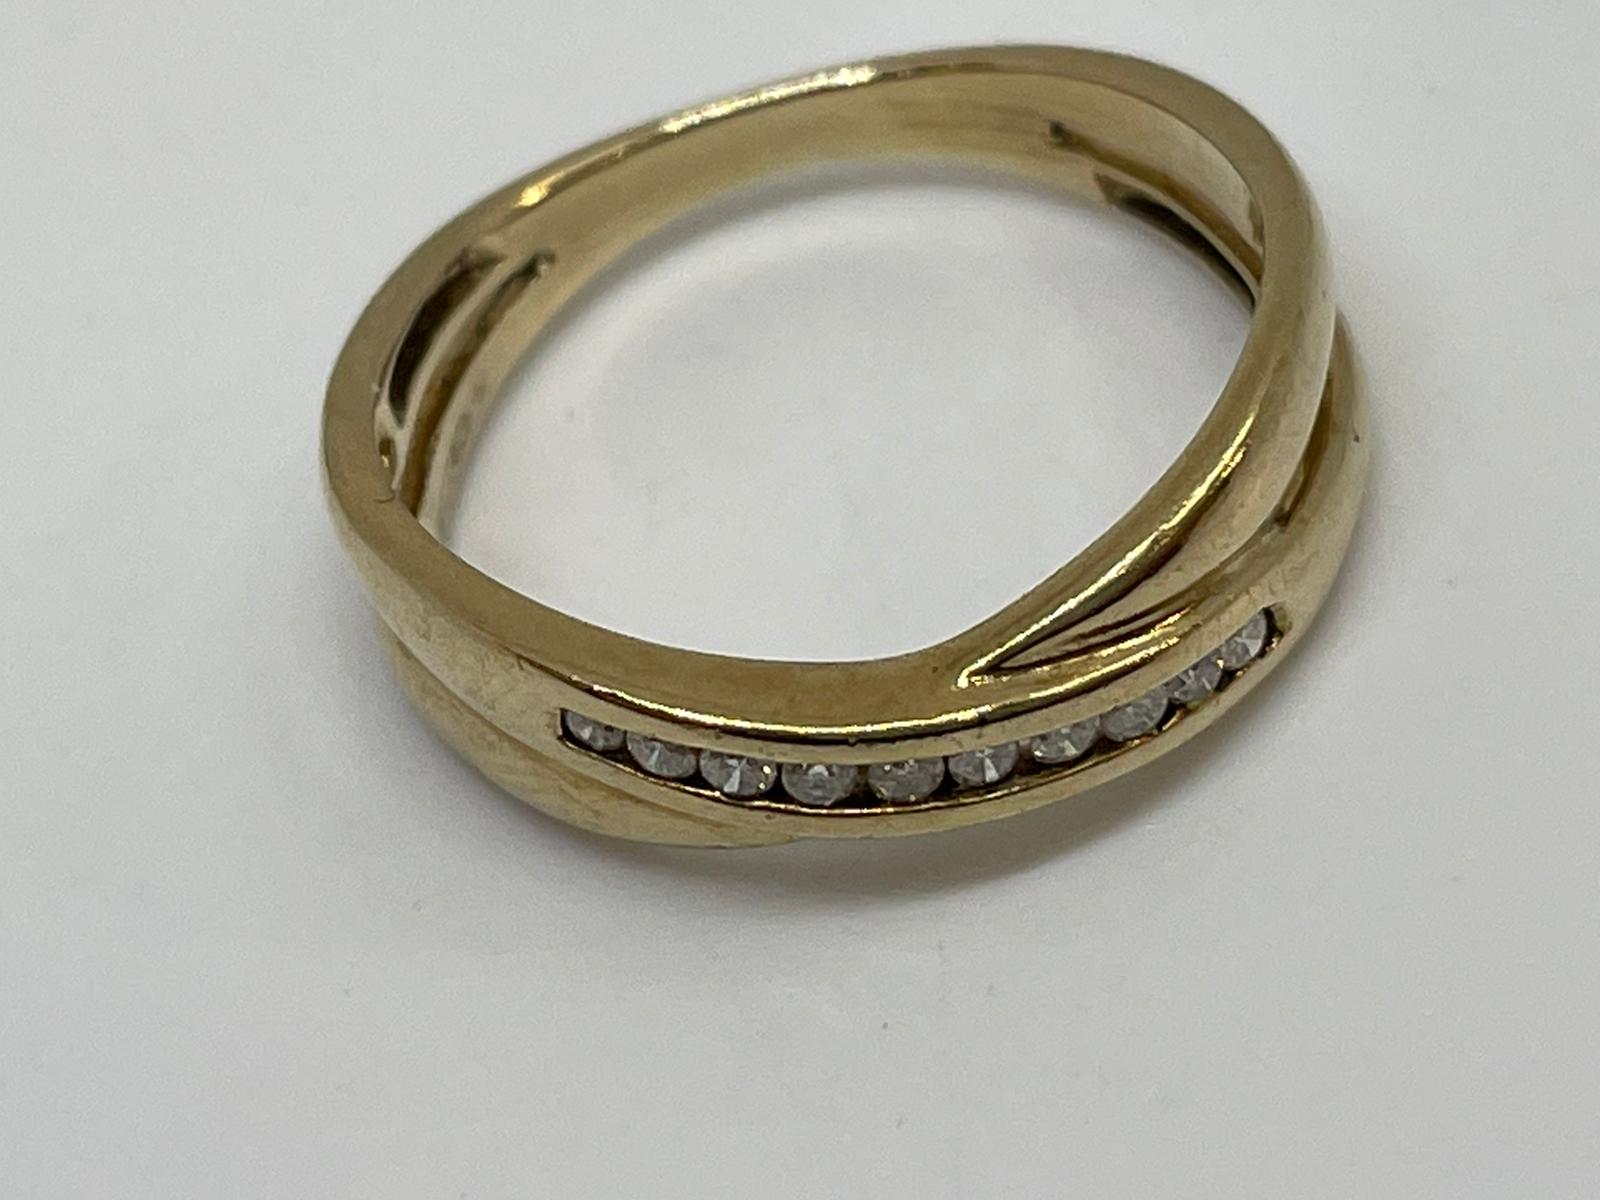 9ct gold diamond ring - Image 2 of 2